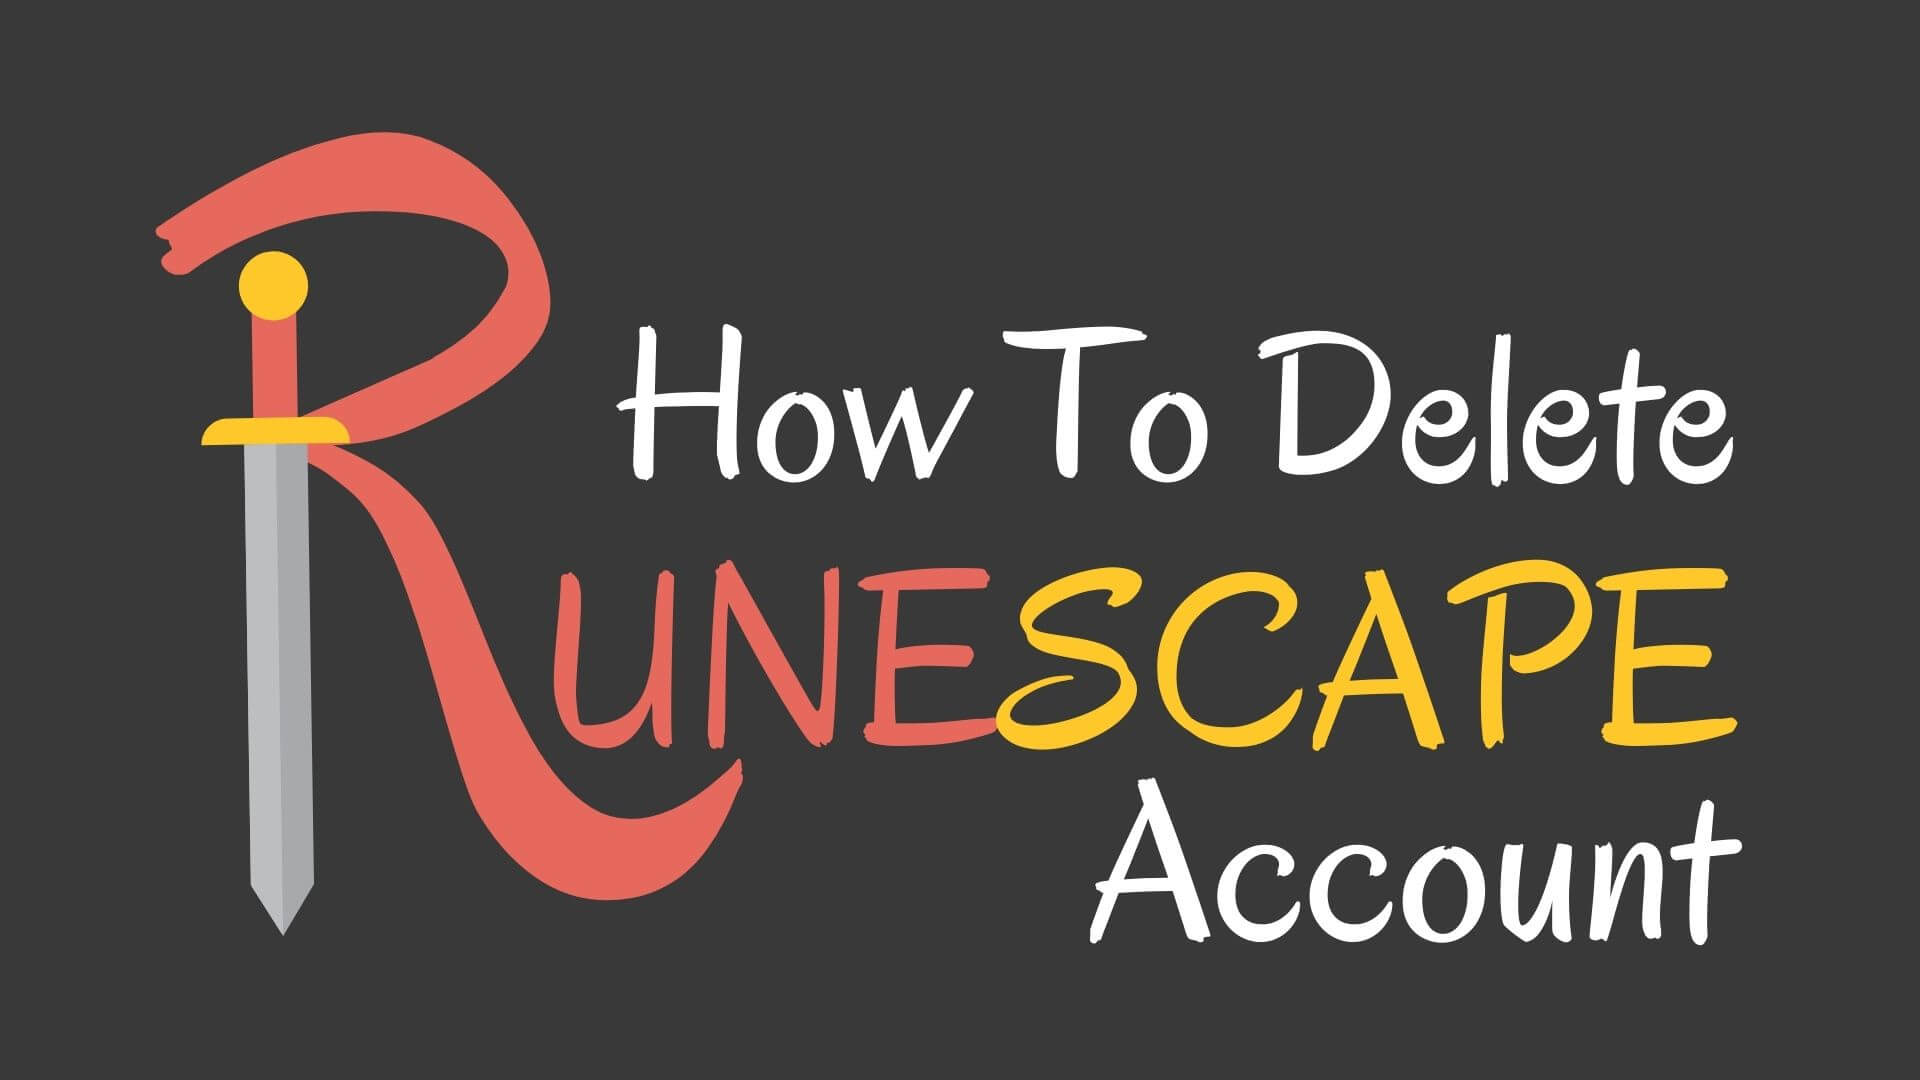 How To Delete Runescape Account?